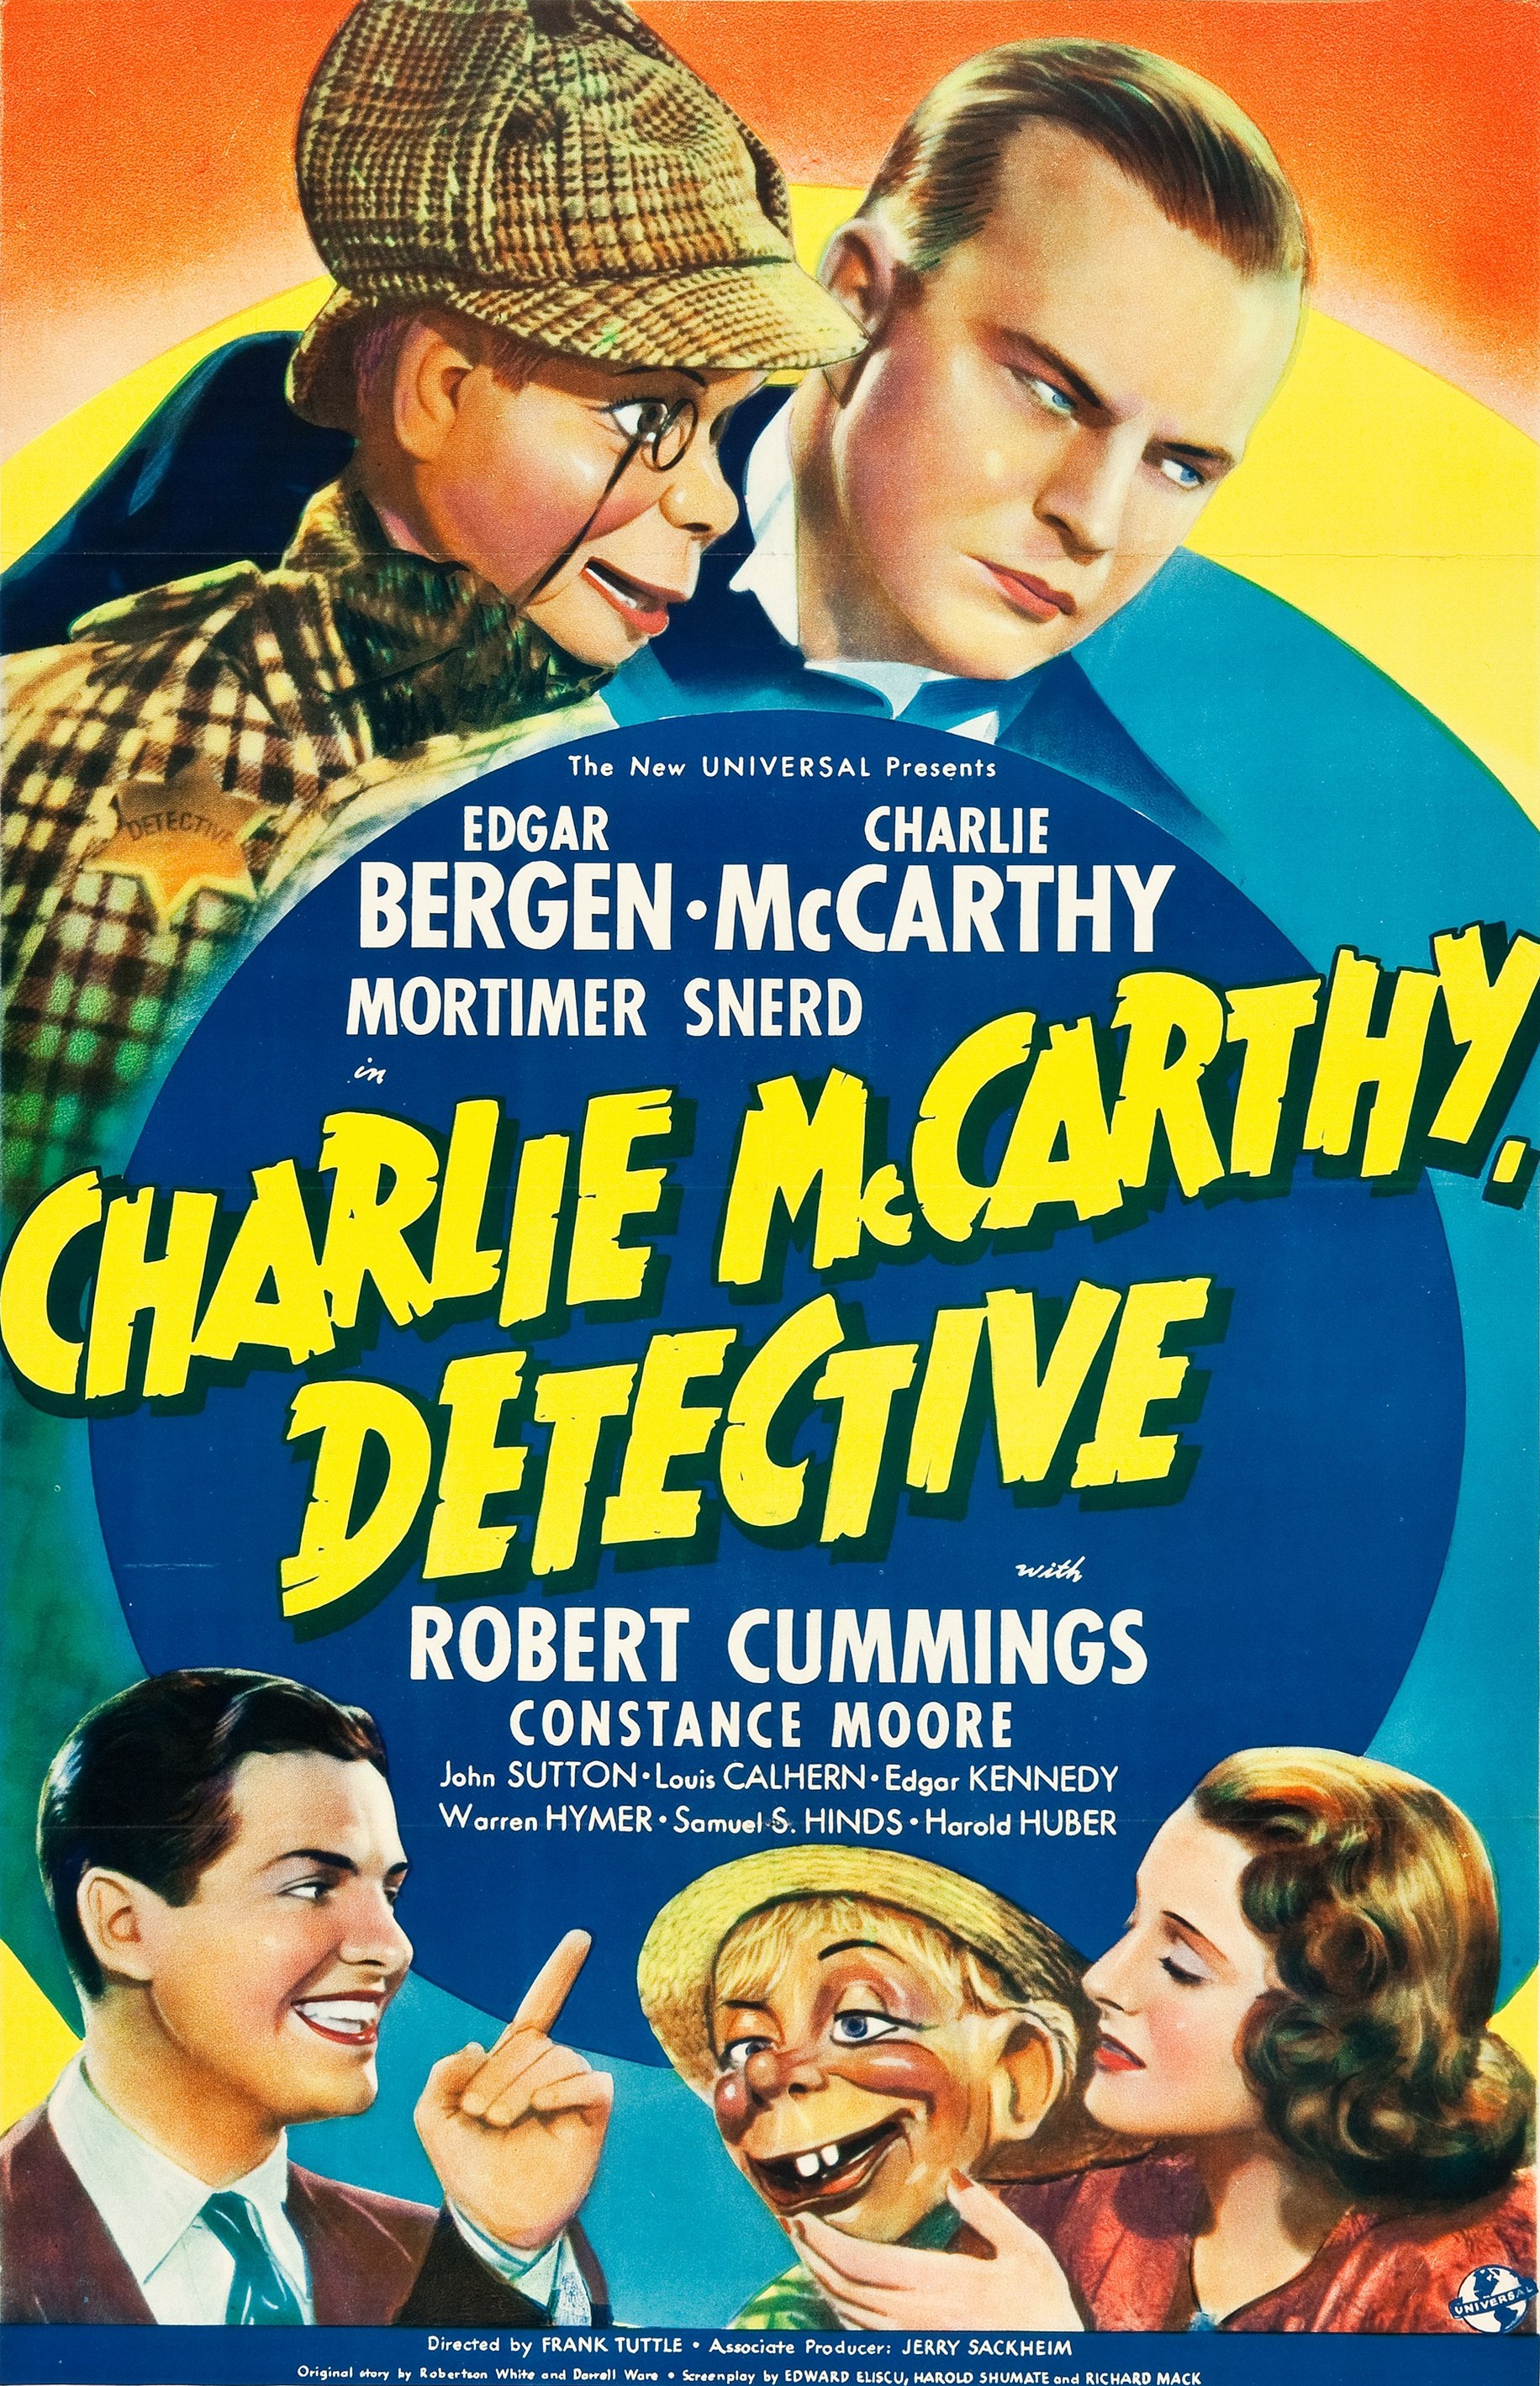 CHARLIE McCARTHY, DETECTIVE (1939)